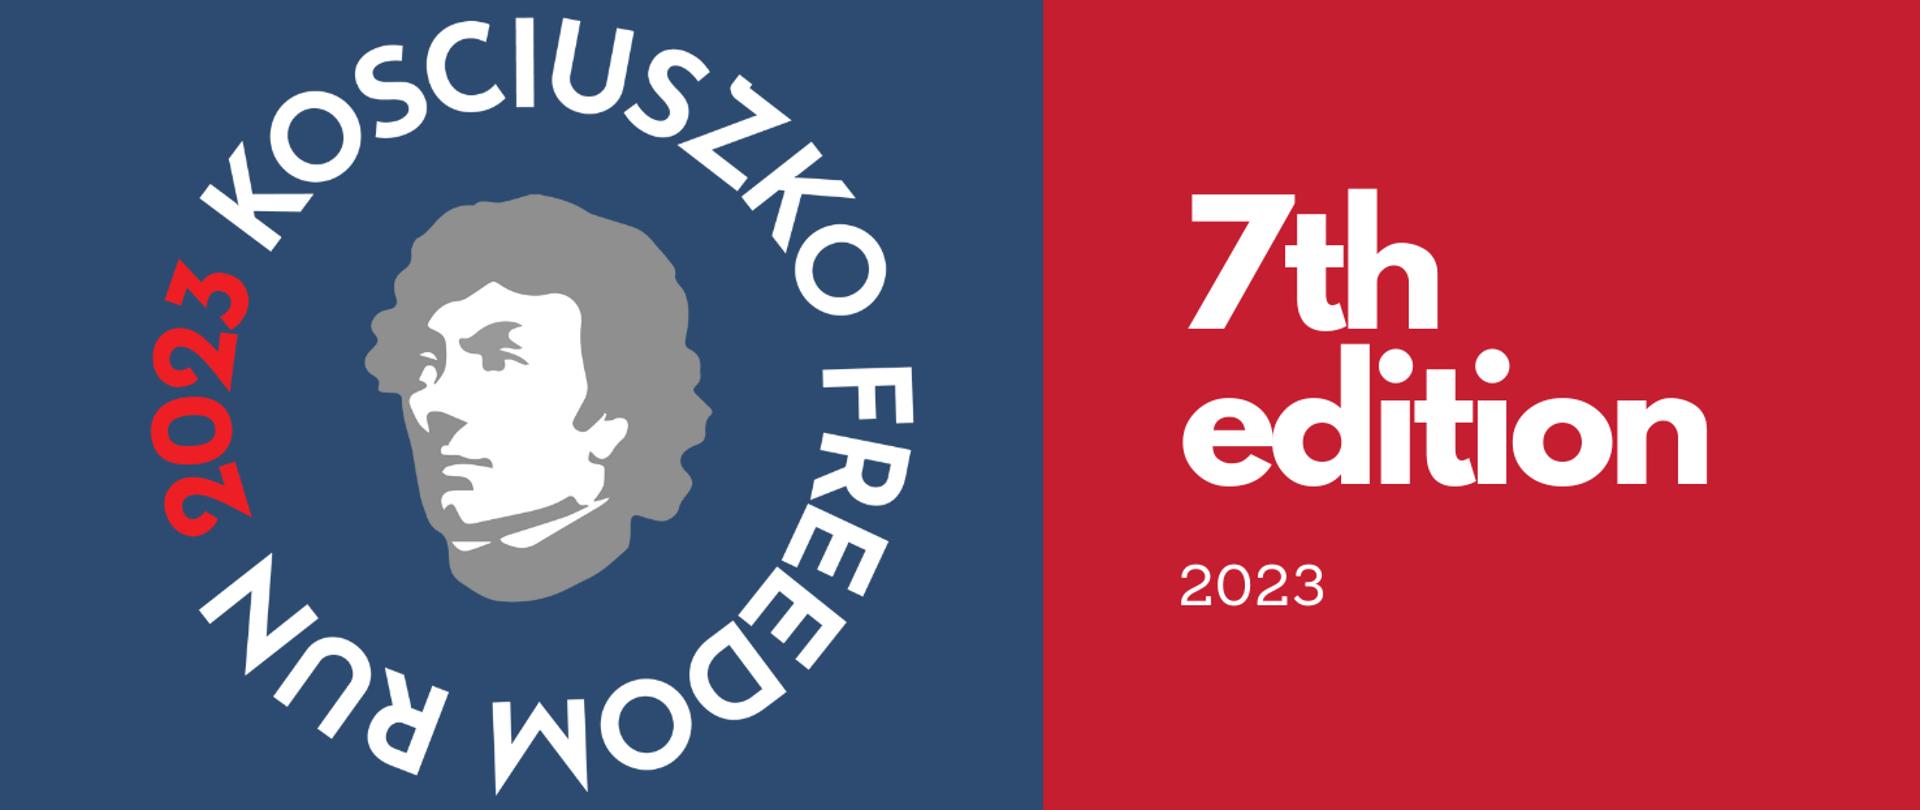 Kosciuszko_2023_logo